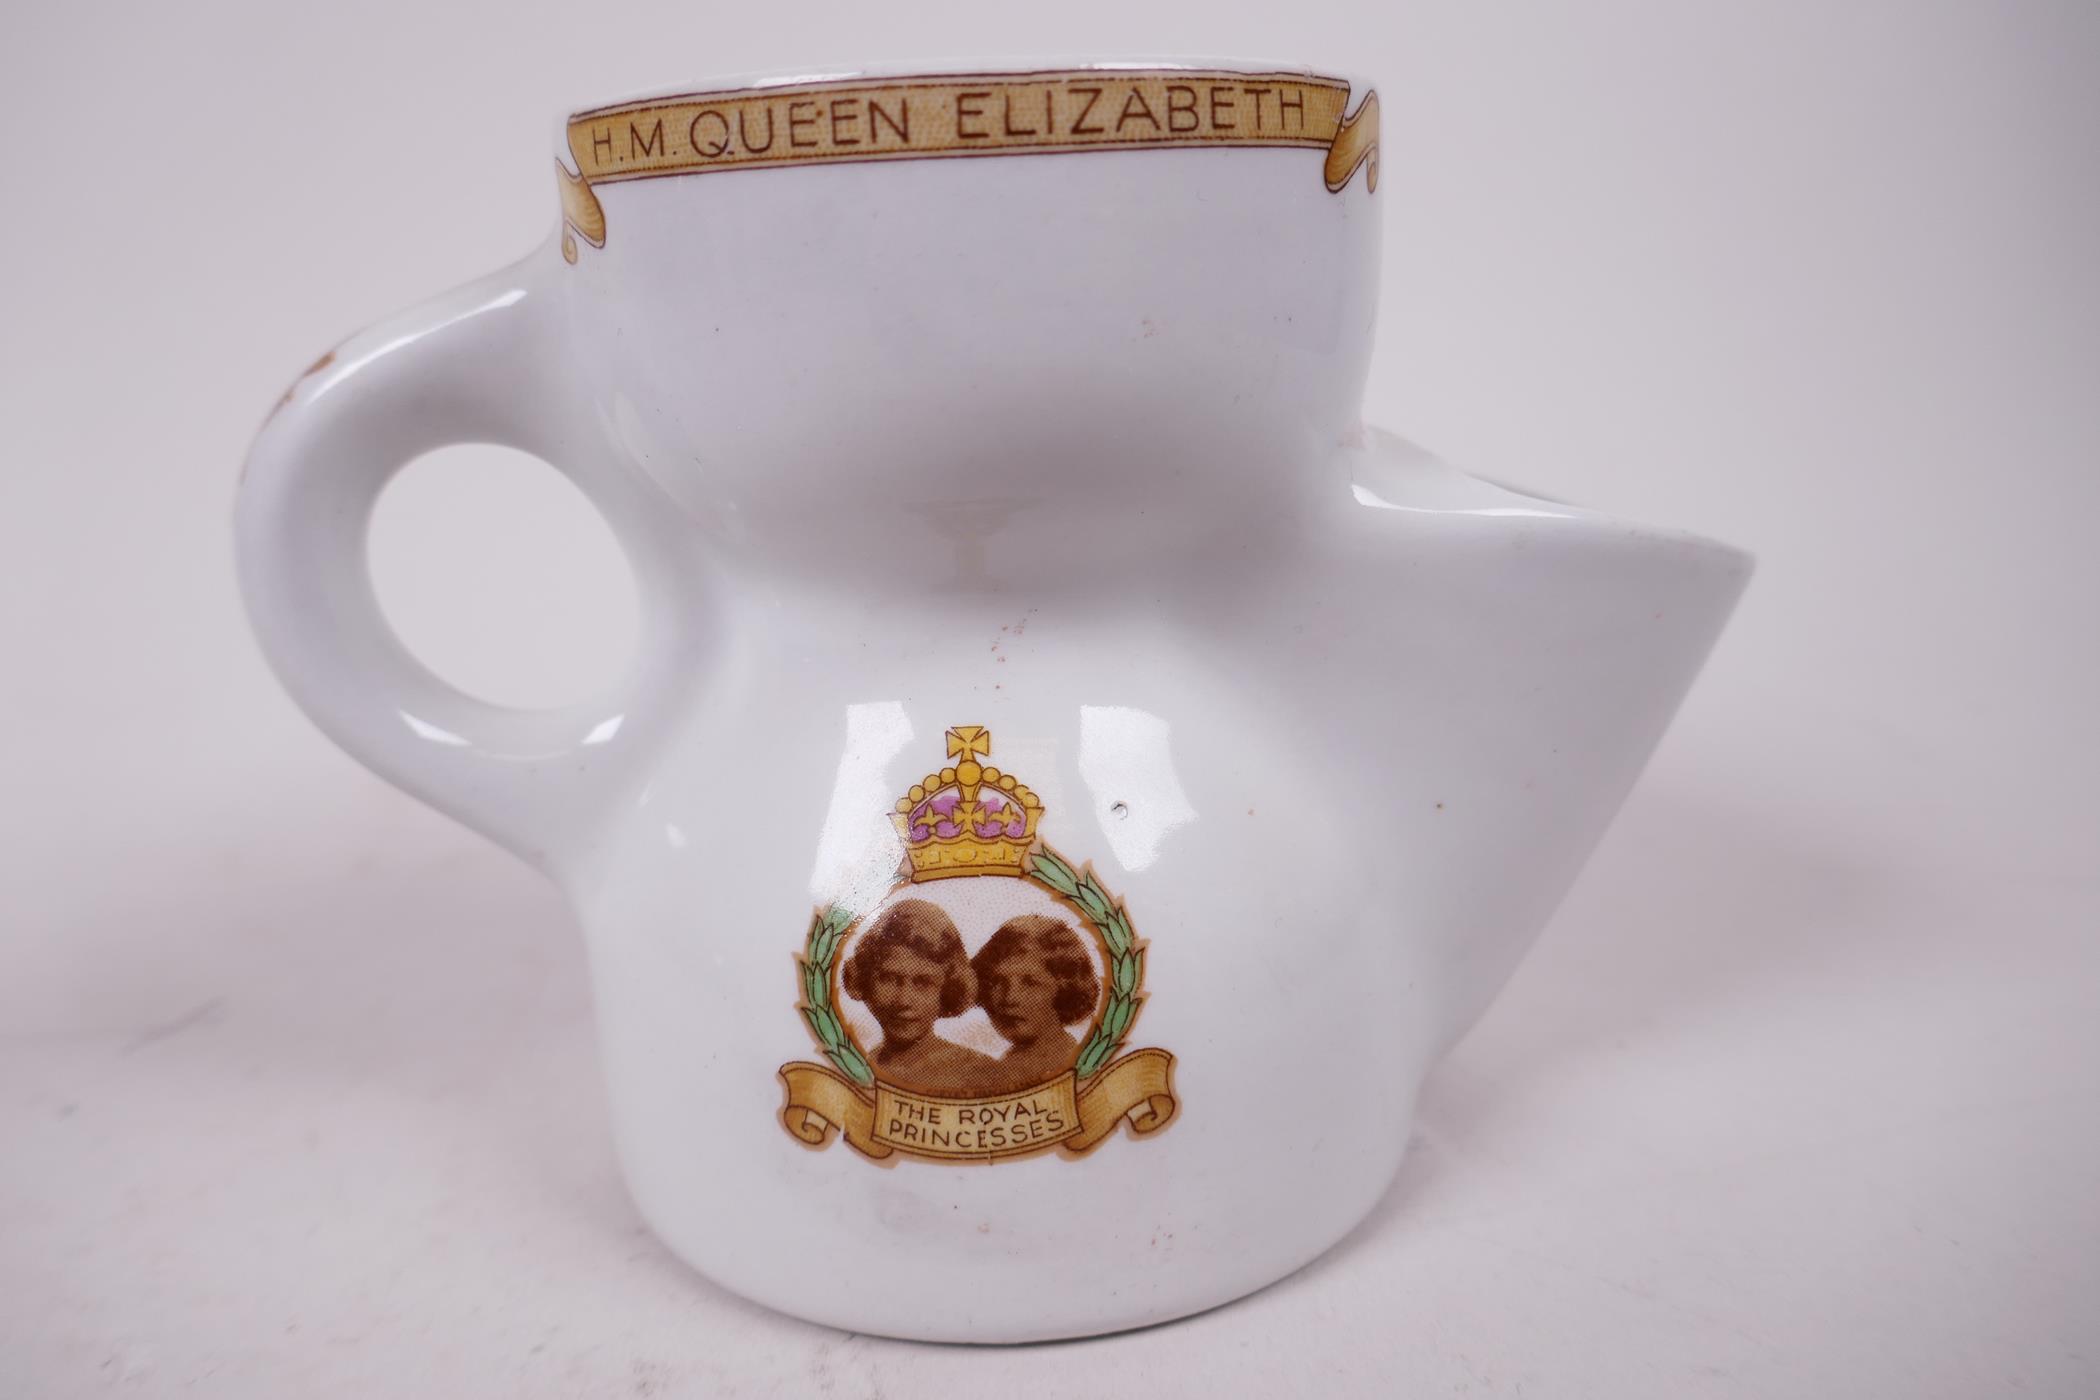 Three 1937 commemorative coronation shaving mugs, cream and white glazed ceramic - Image 10 of 11